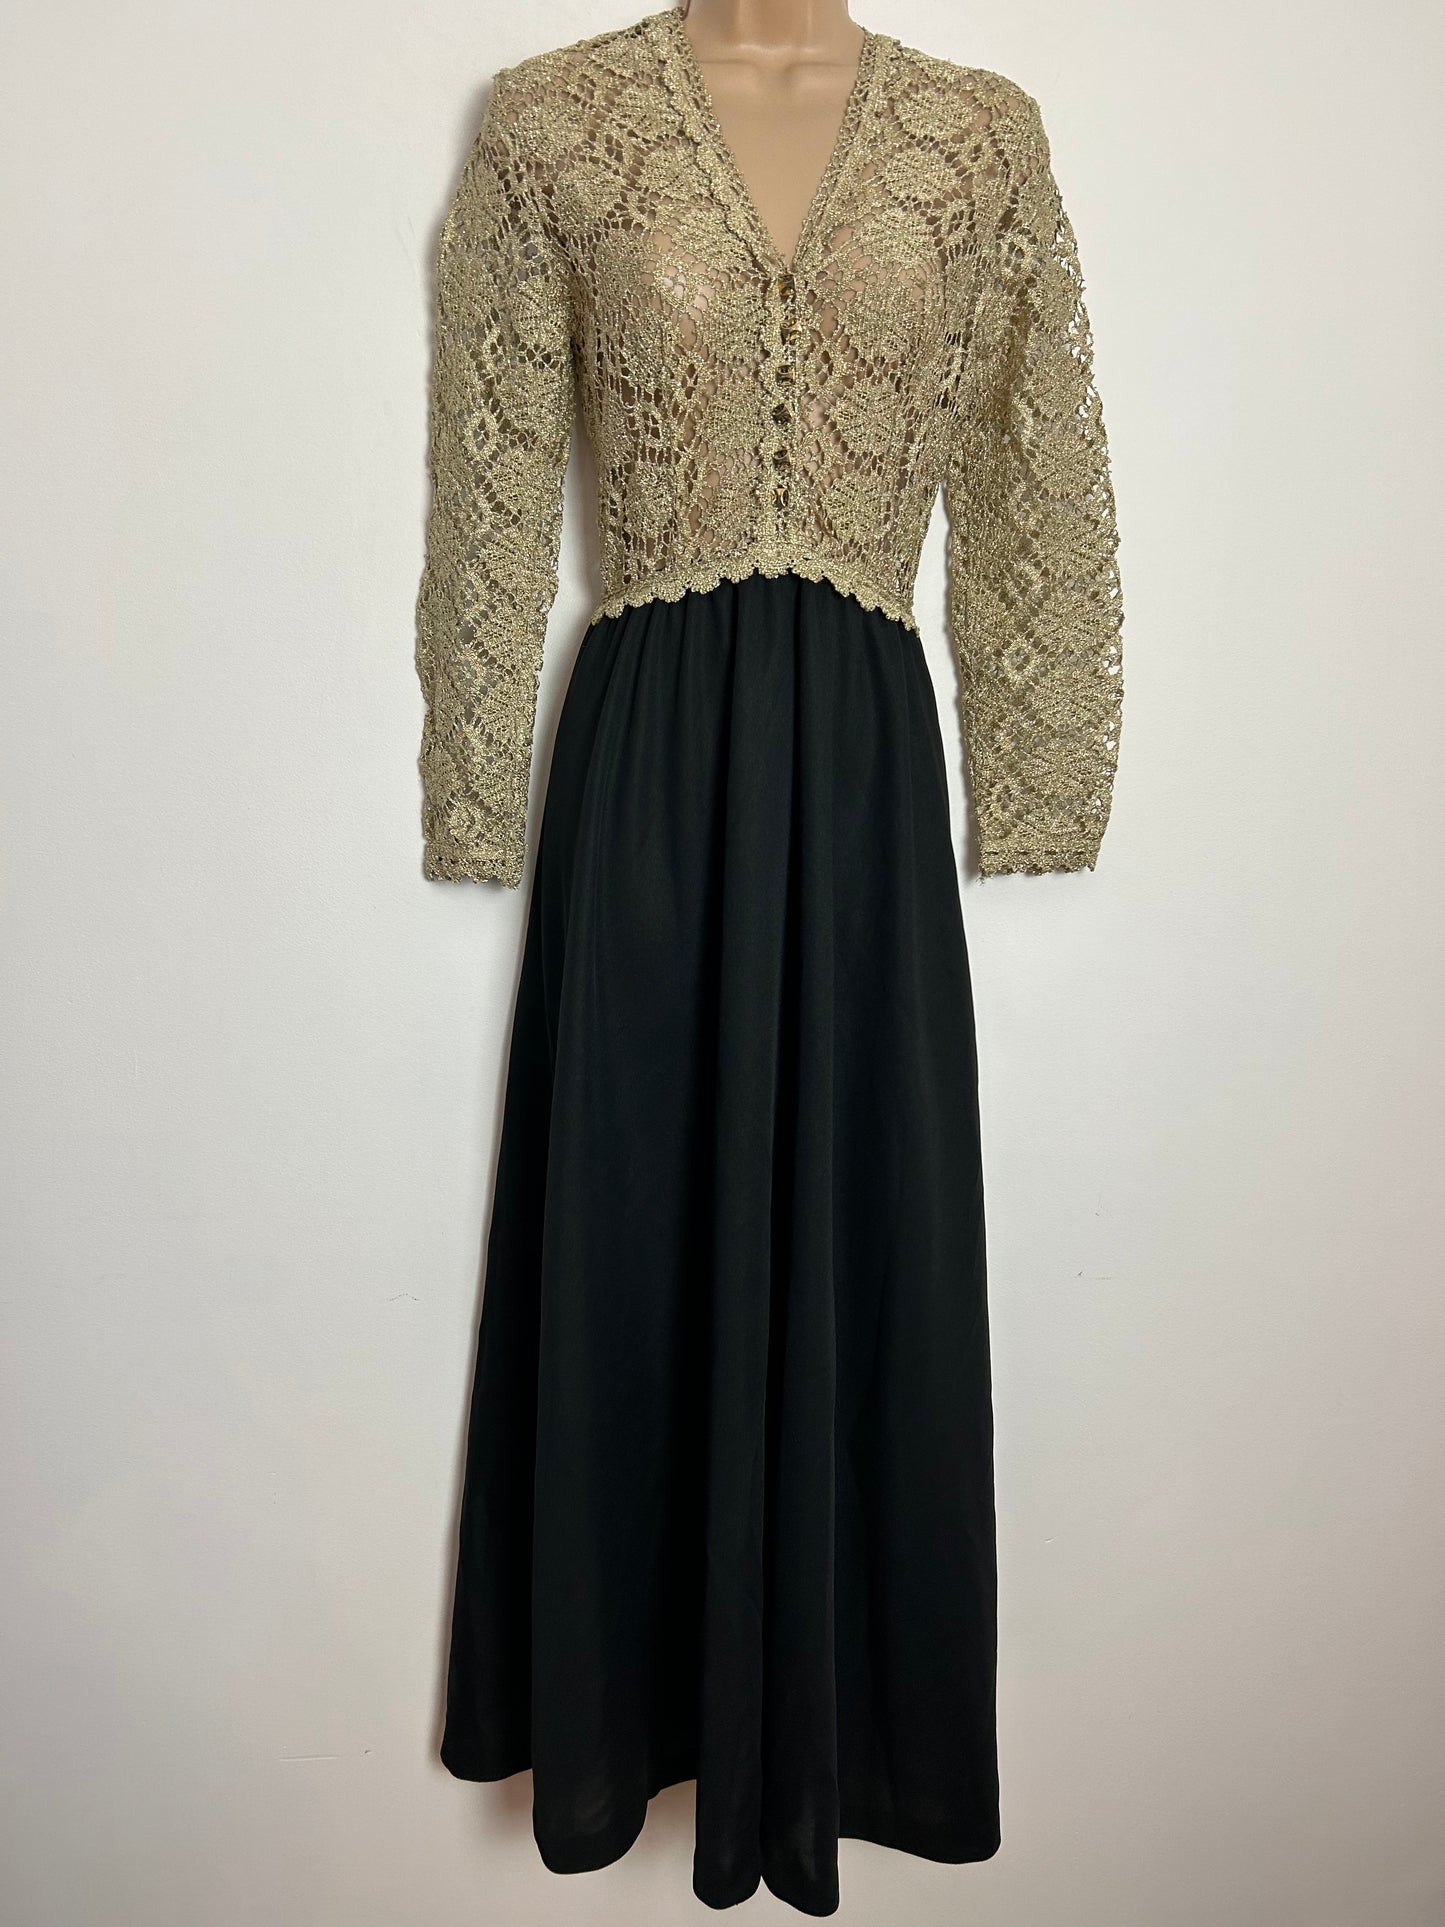 Vintage 1970s UK Size 6 Black & Metallic Gold Crochet Bodice Long Sleeve Occasion Evening Maxi Dress